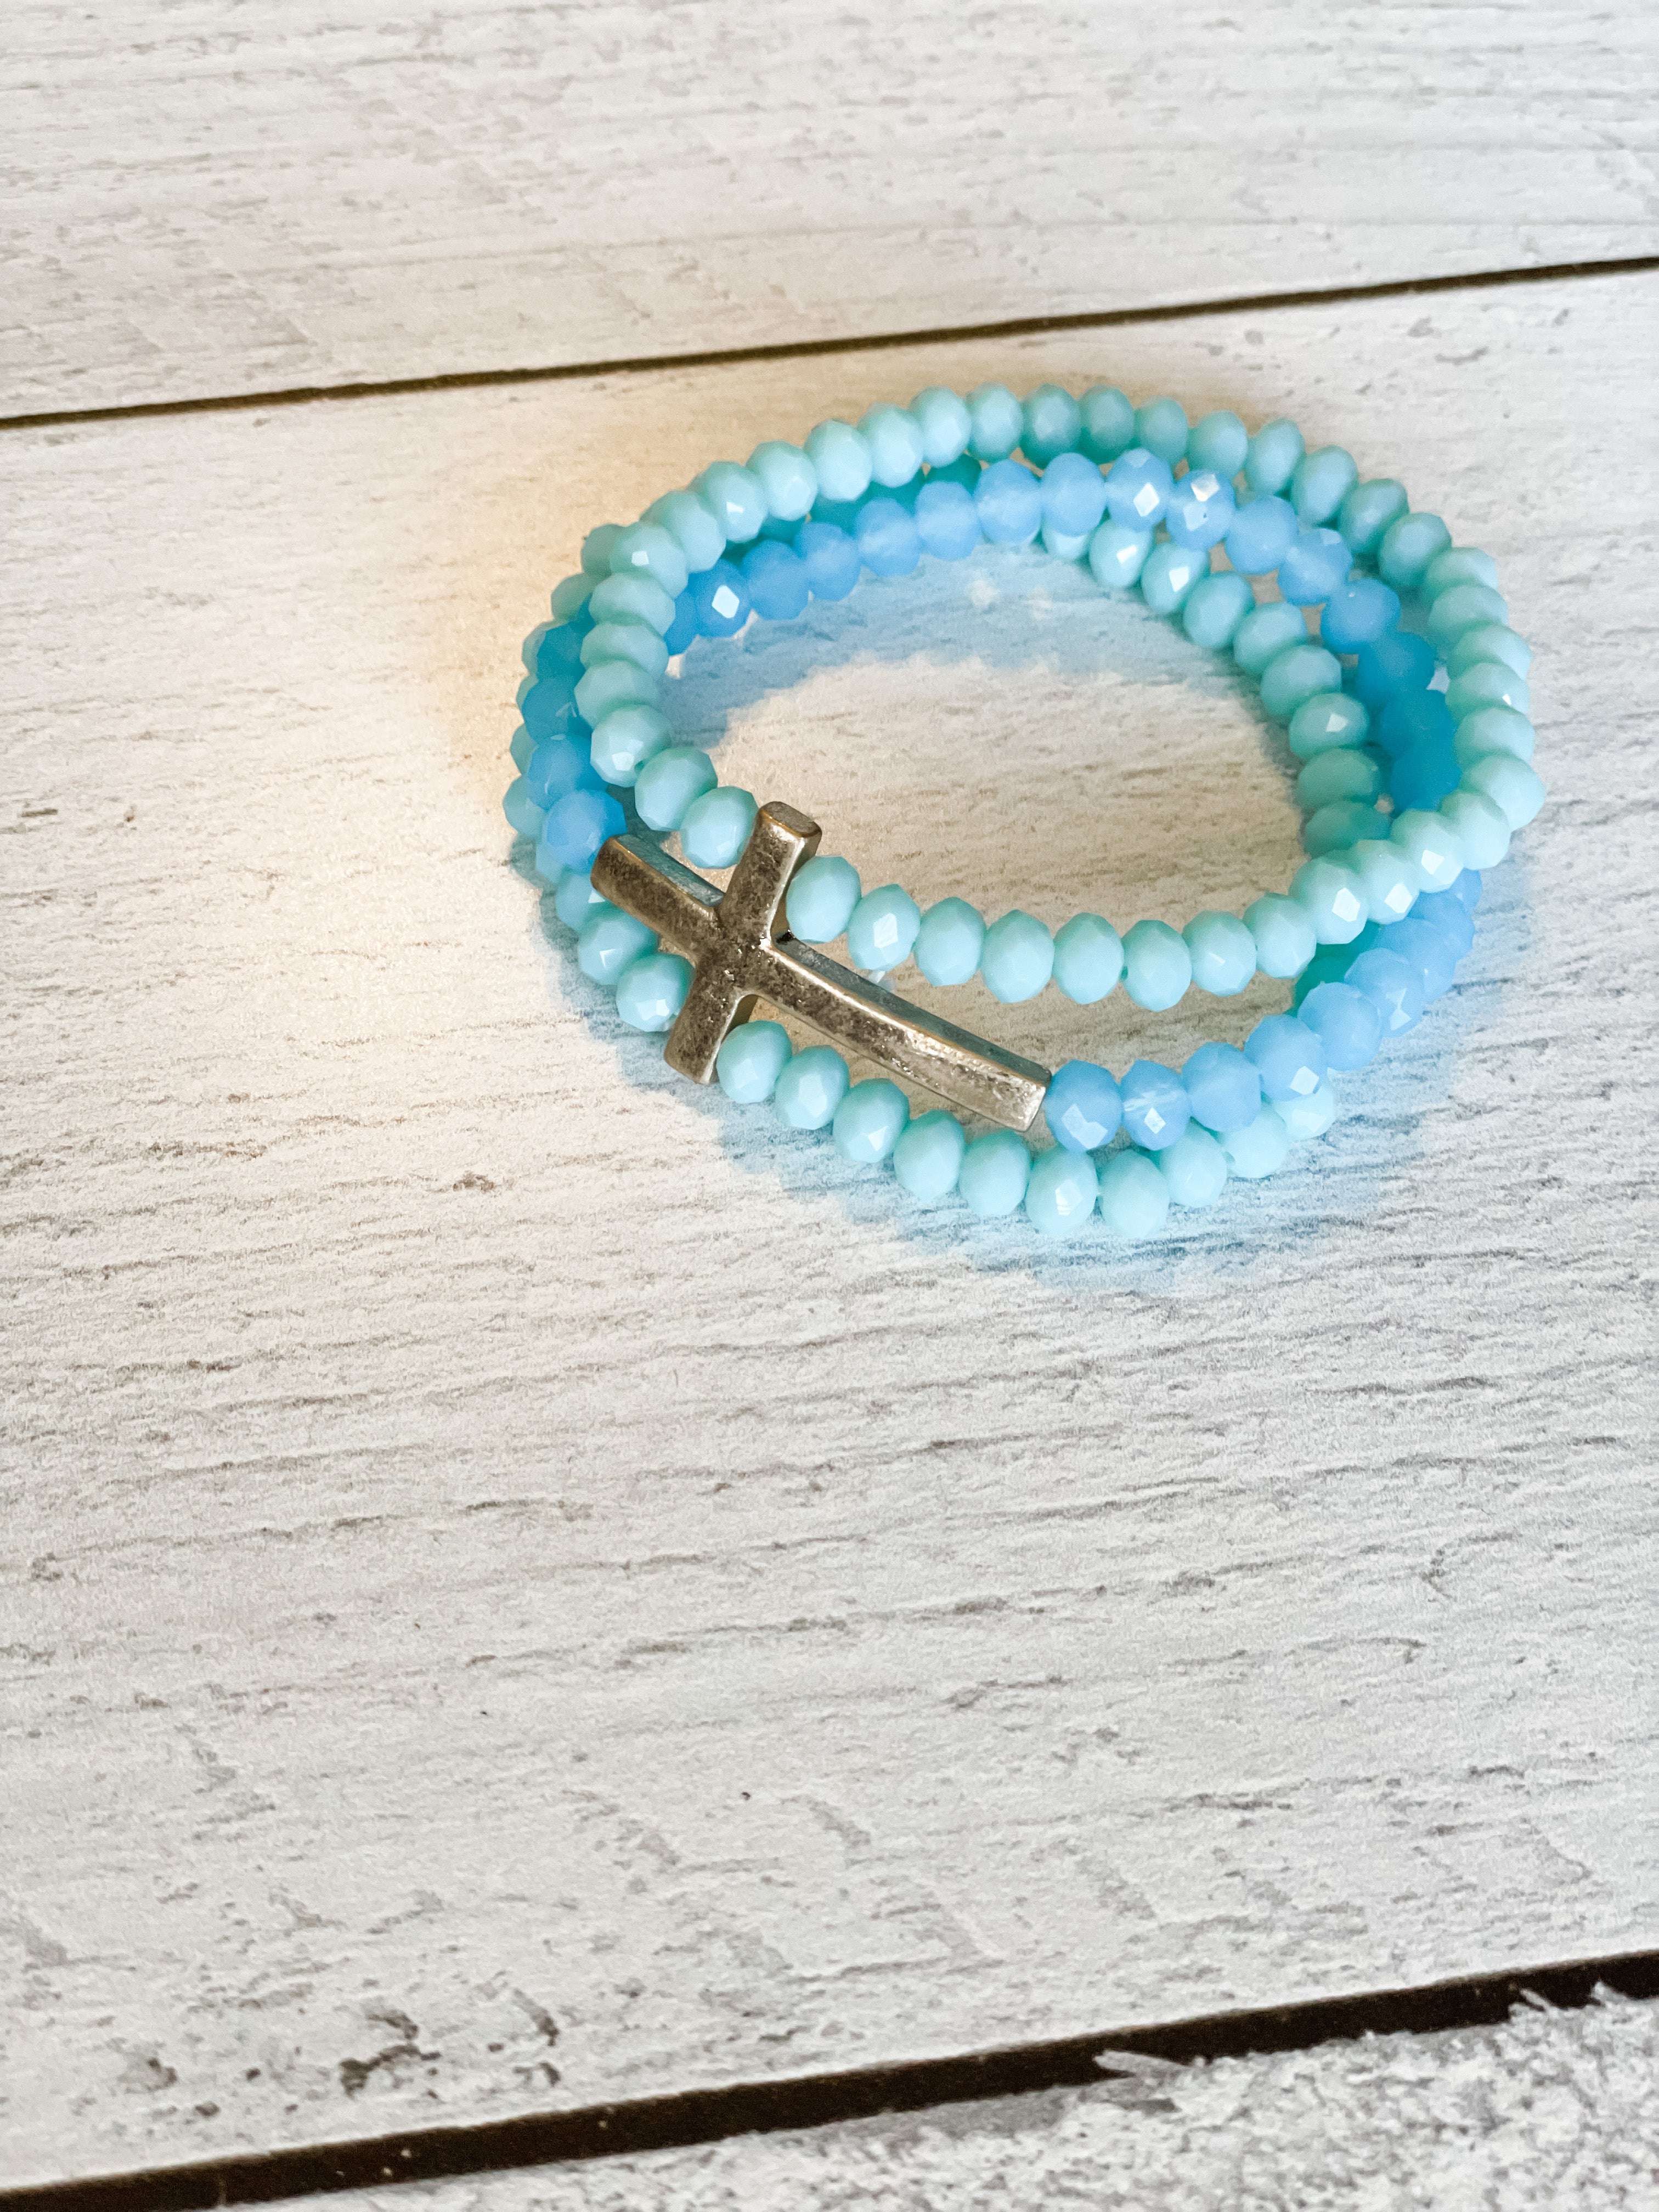 beautiful aqua glass bead 3-strand bracelet with gold cross accent piece